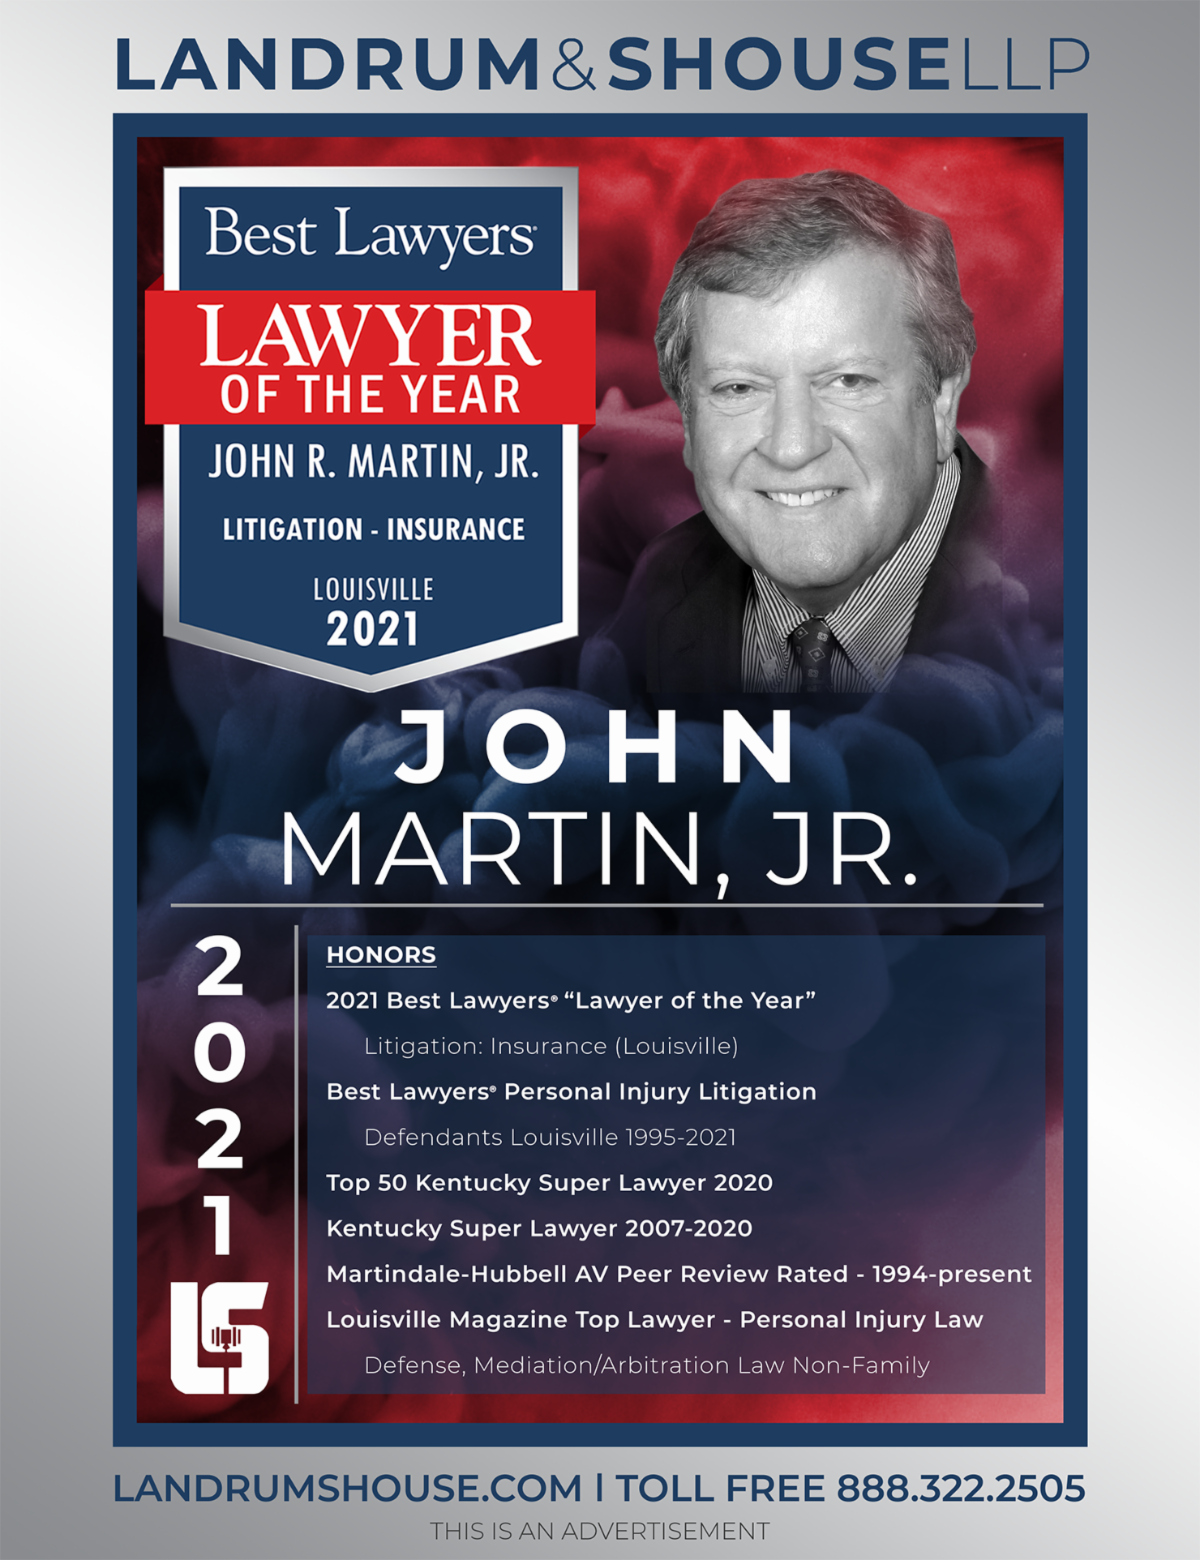 Landrum & Shouse LLP | Best Lawyers Best Lawyer of the Year John R. Martin, Jr. Litigation - Insurance | Louisville 2021